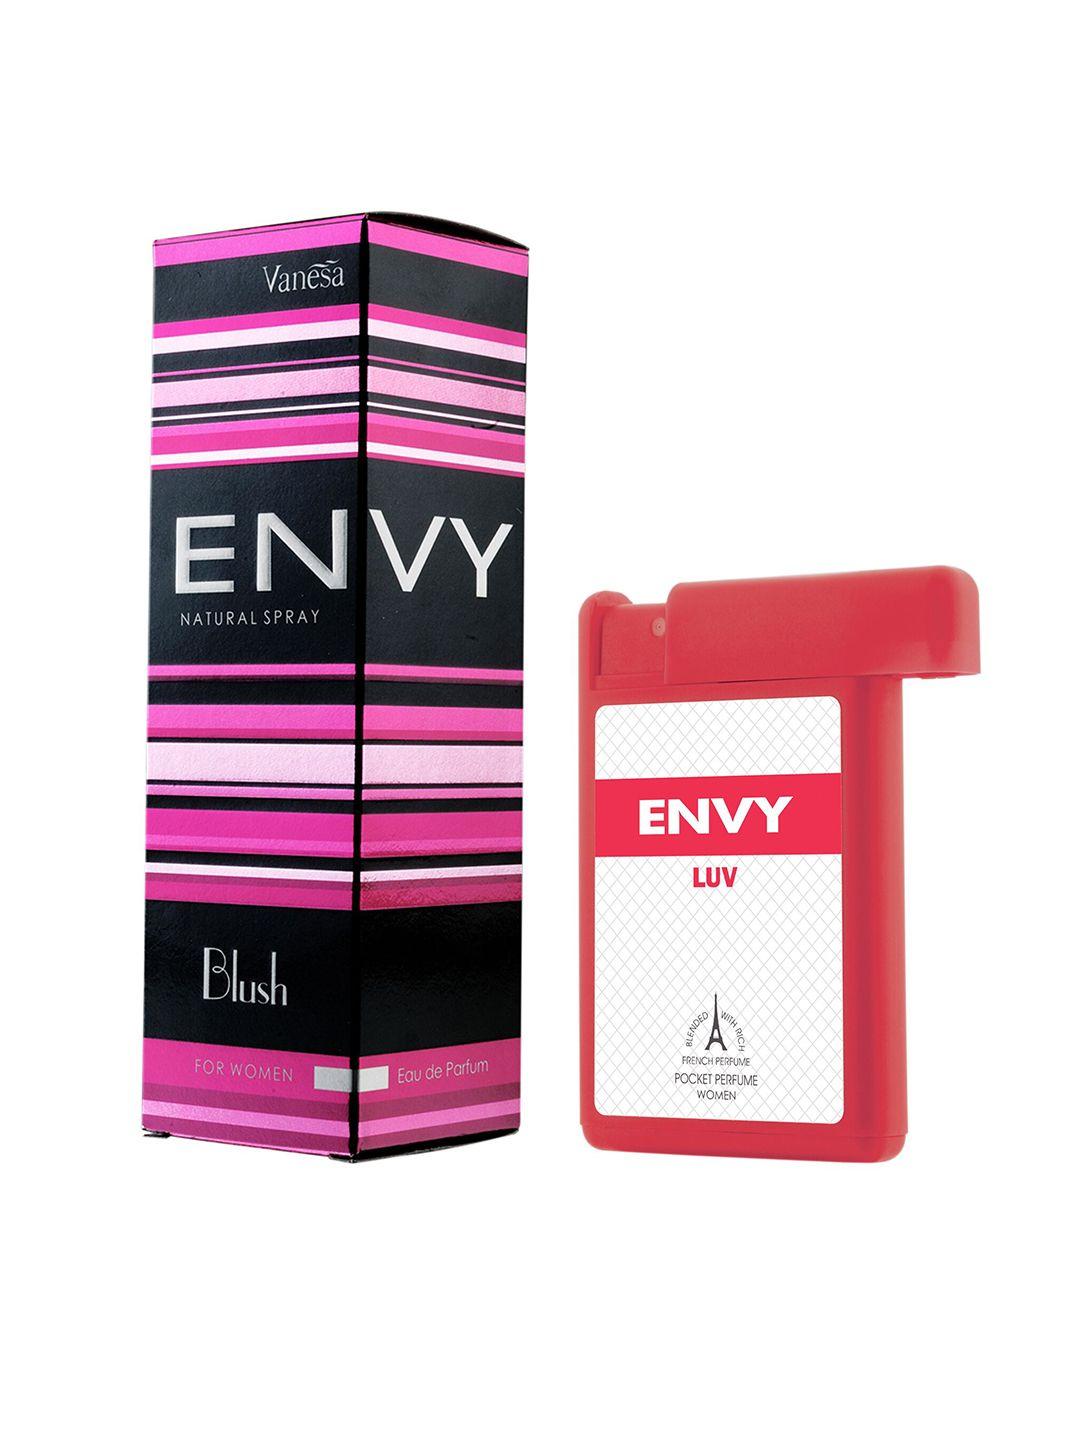 envy set of natural spray blush eau de parfum & luv pocket perfume